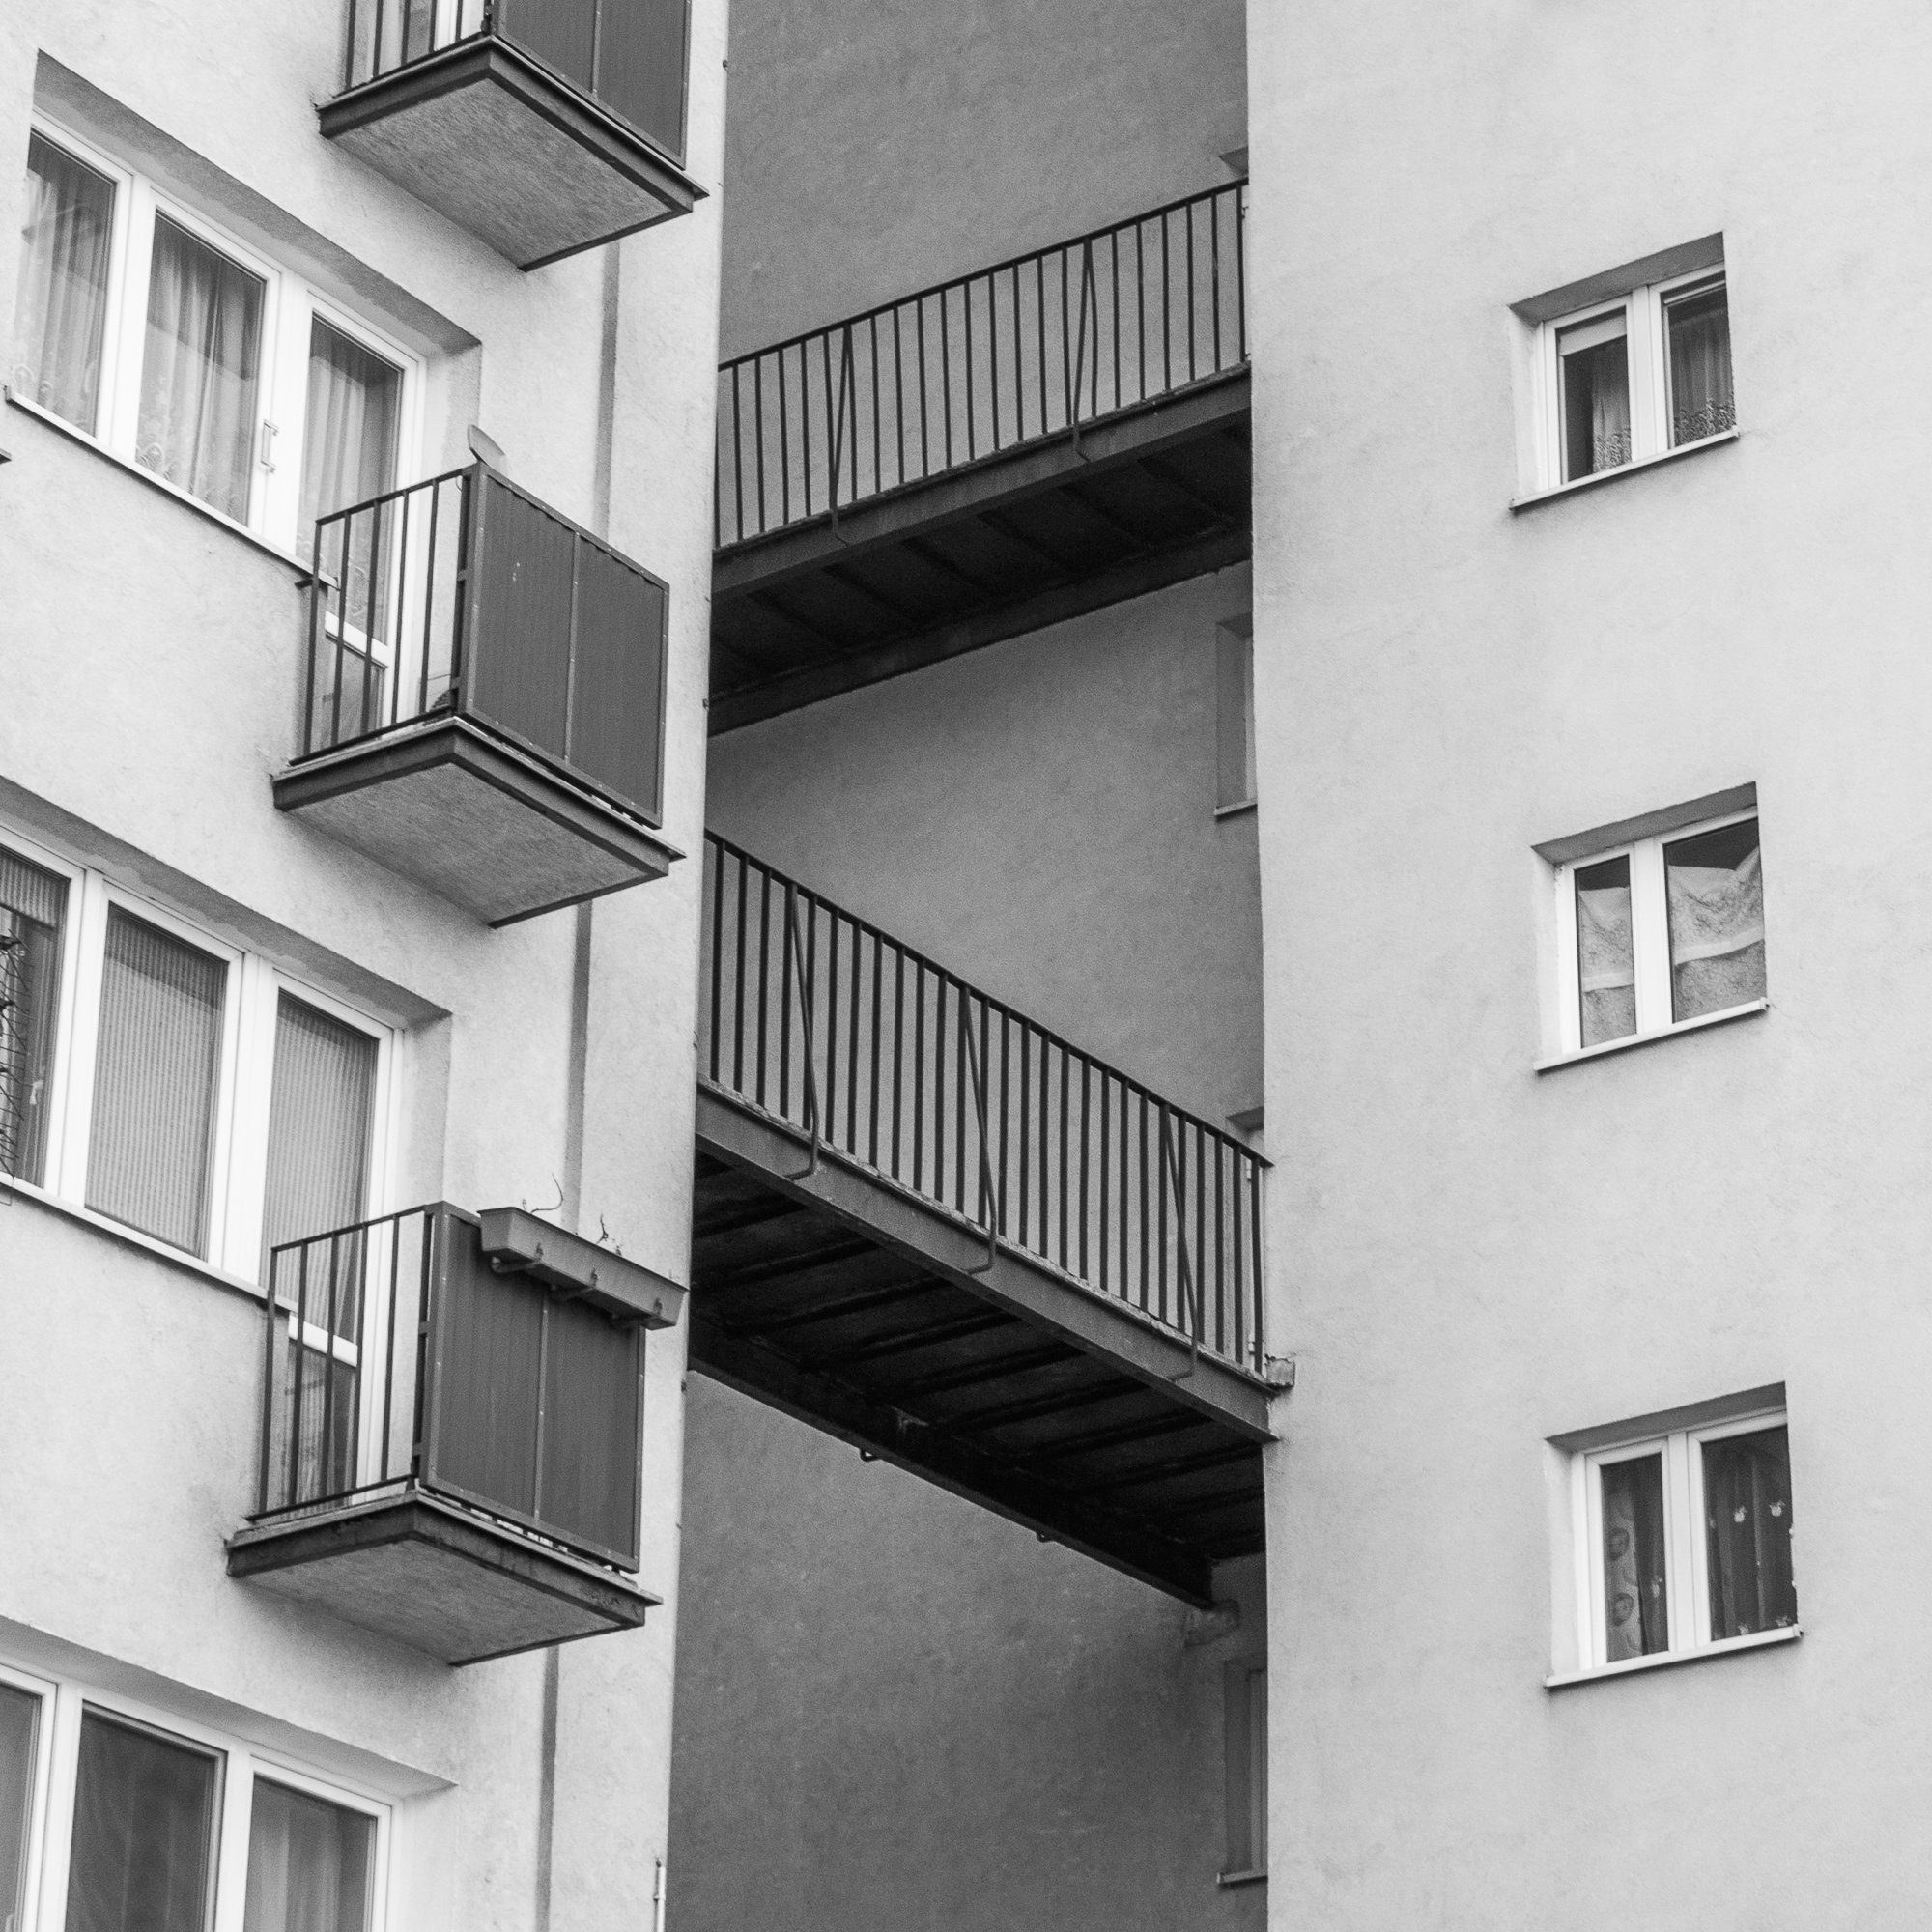 Adam Mazek Photography. Warsaw (Warszawa) 2017. M.C. Escher. Square. Perspective. Minimalism. Blocks of flats.